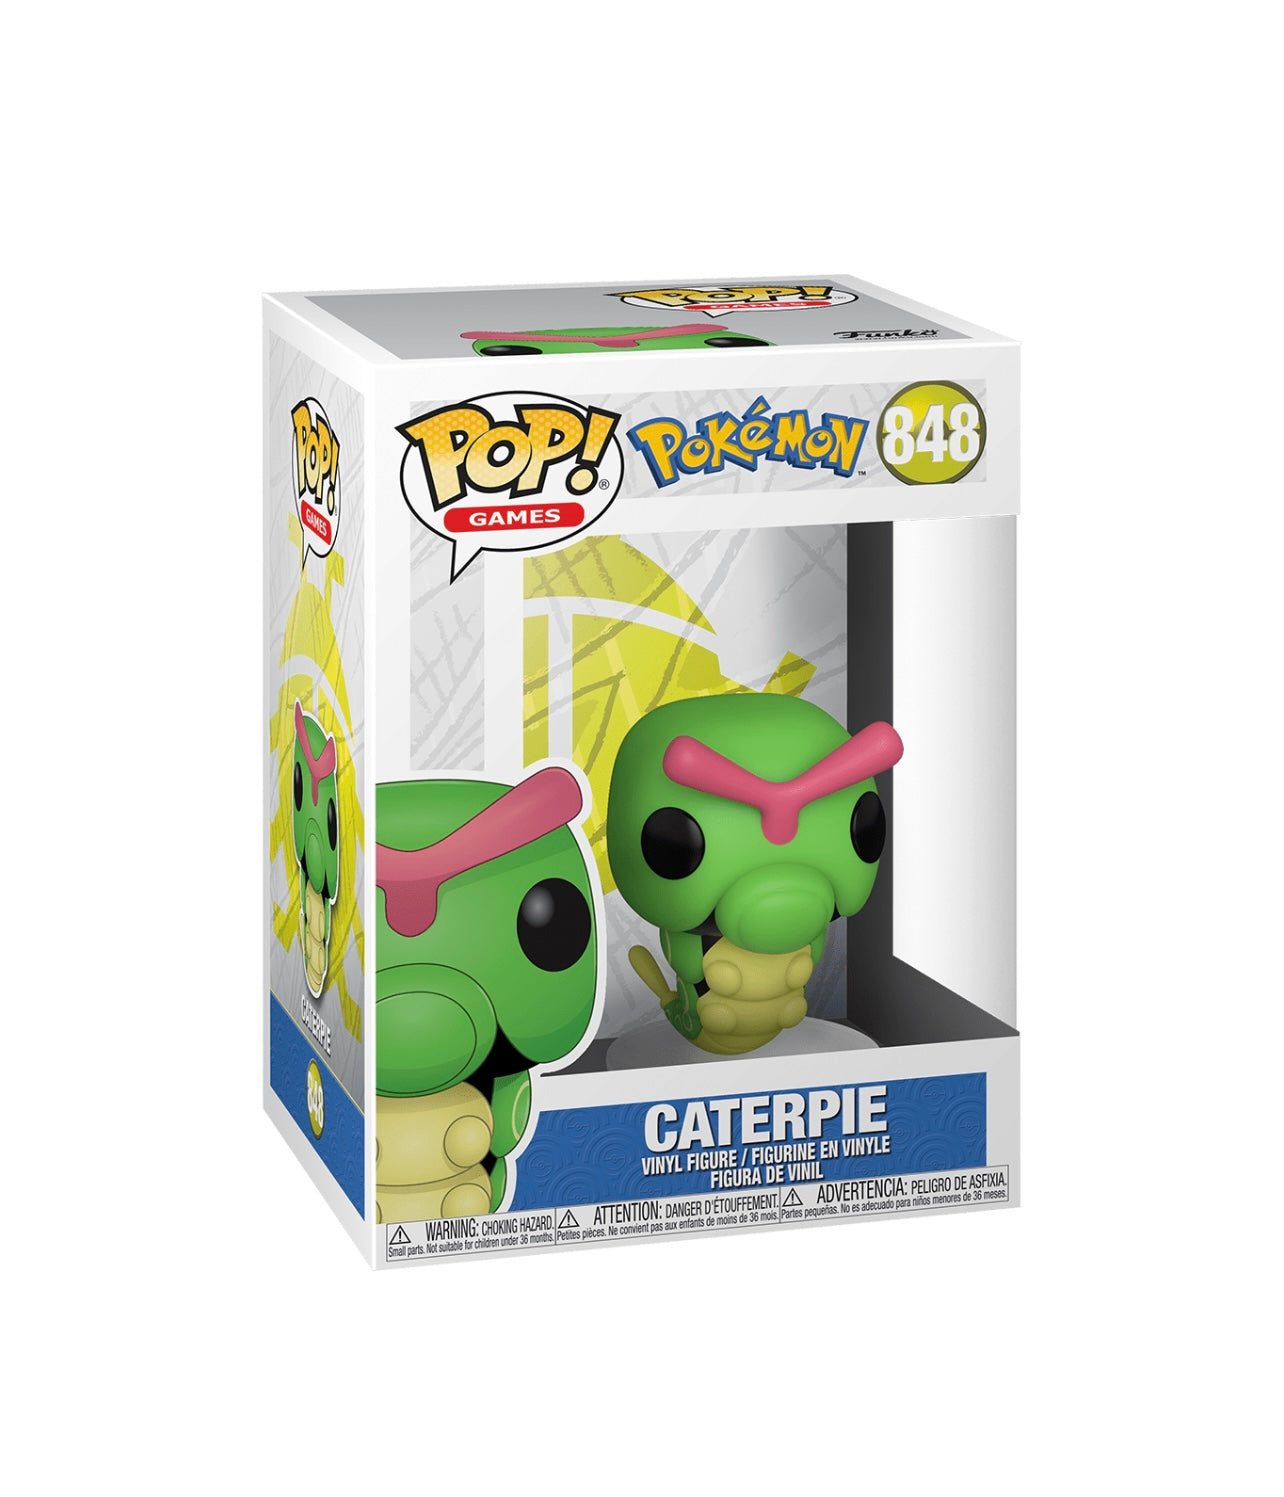 POP! Pokemon Caterpie #848